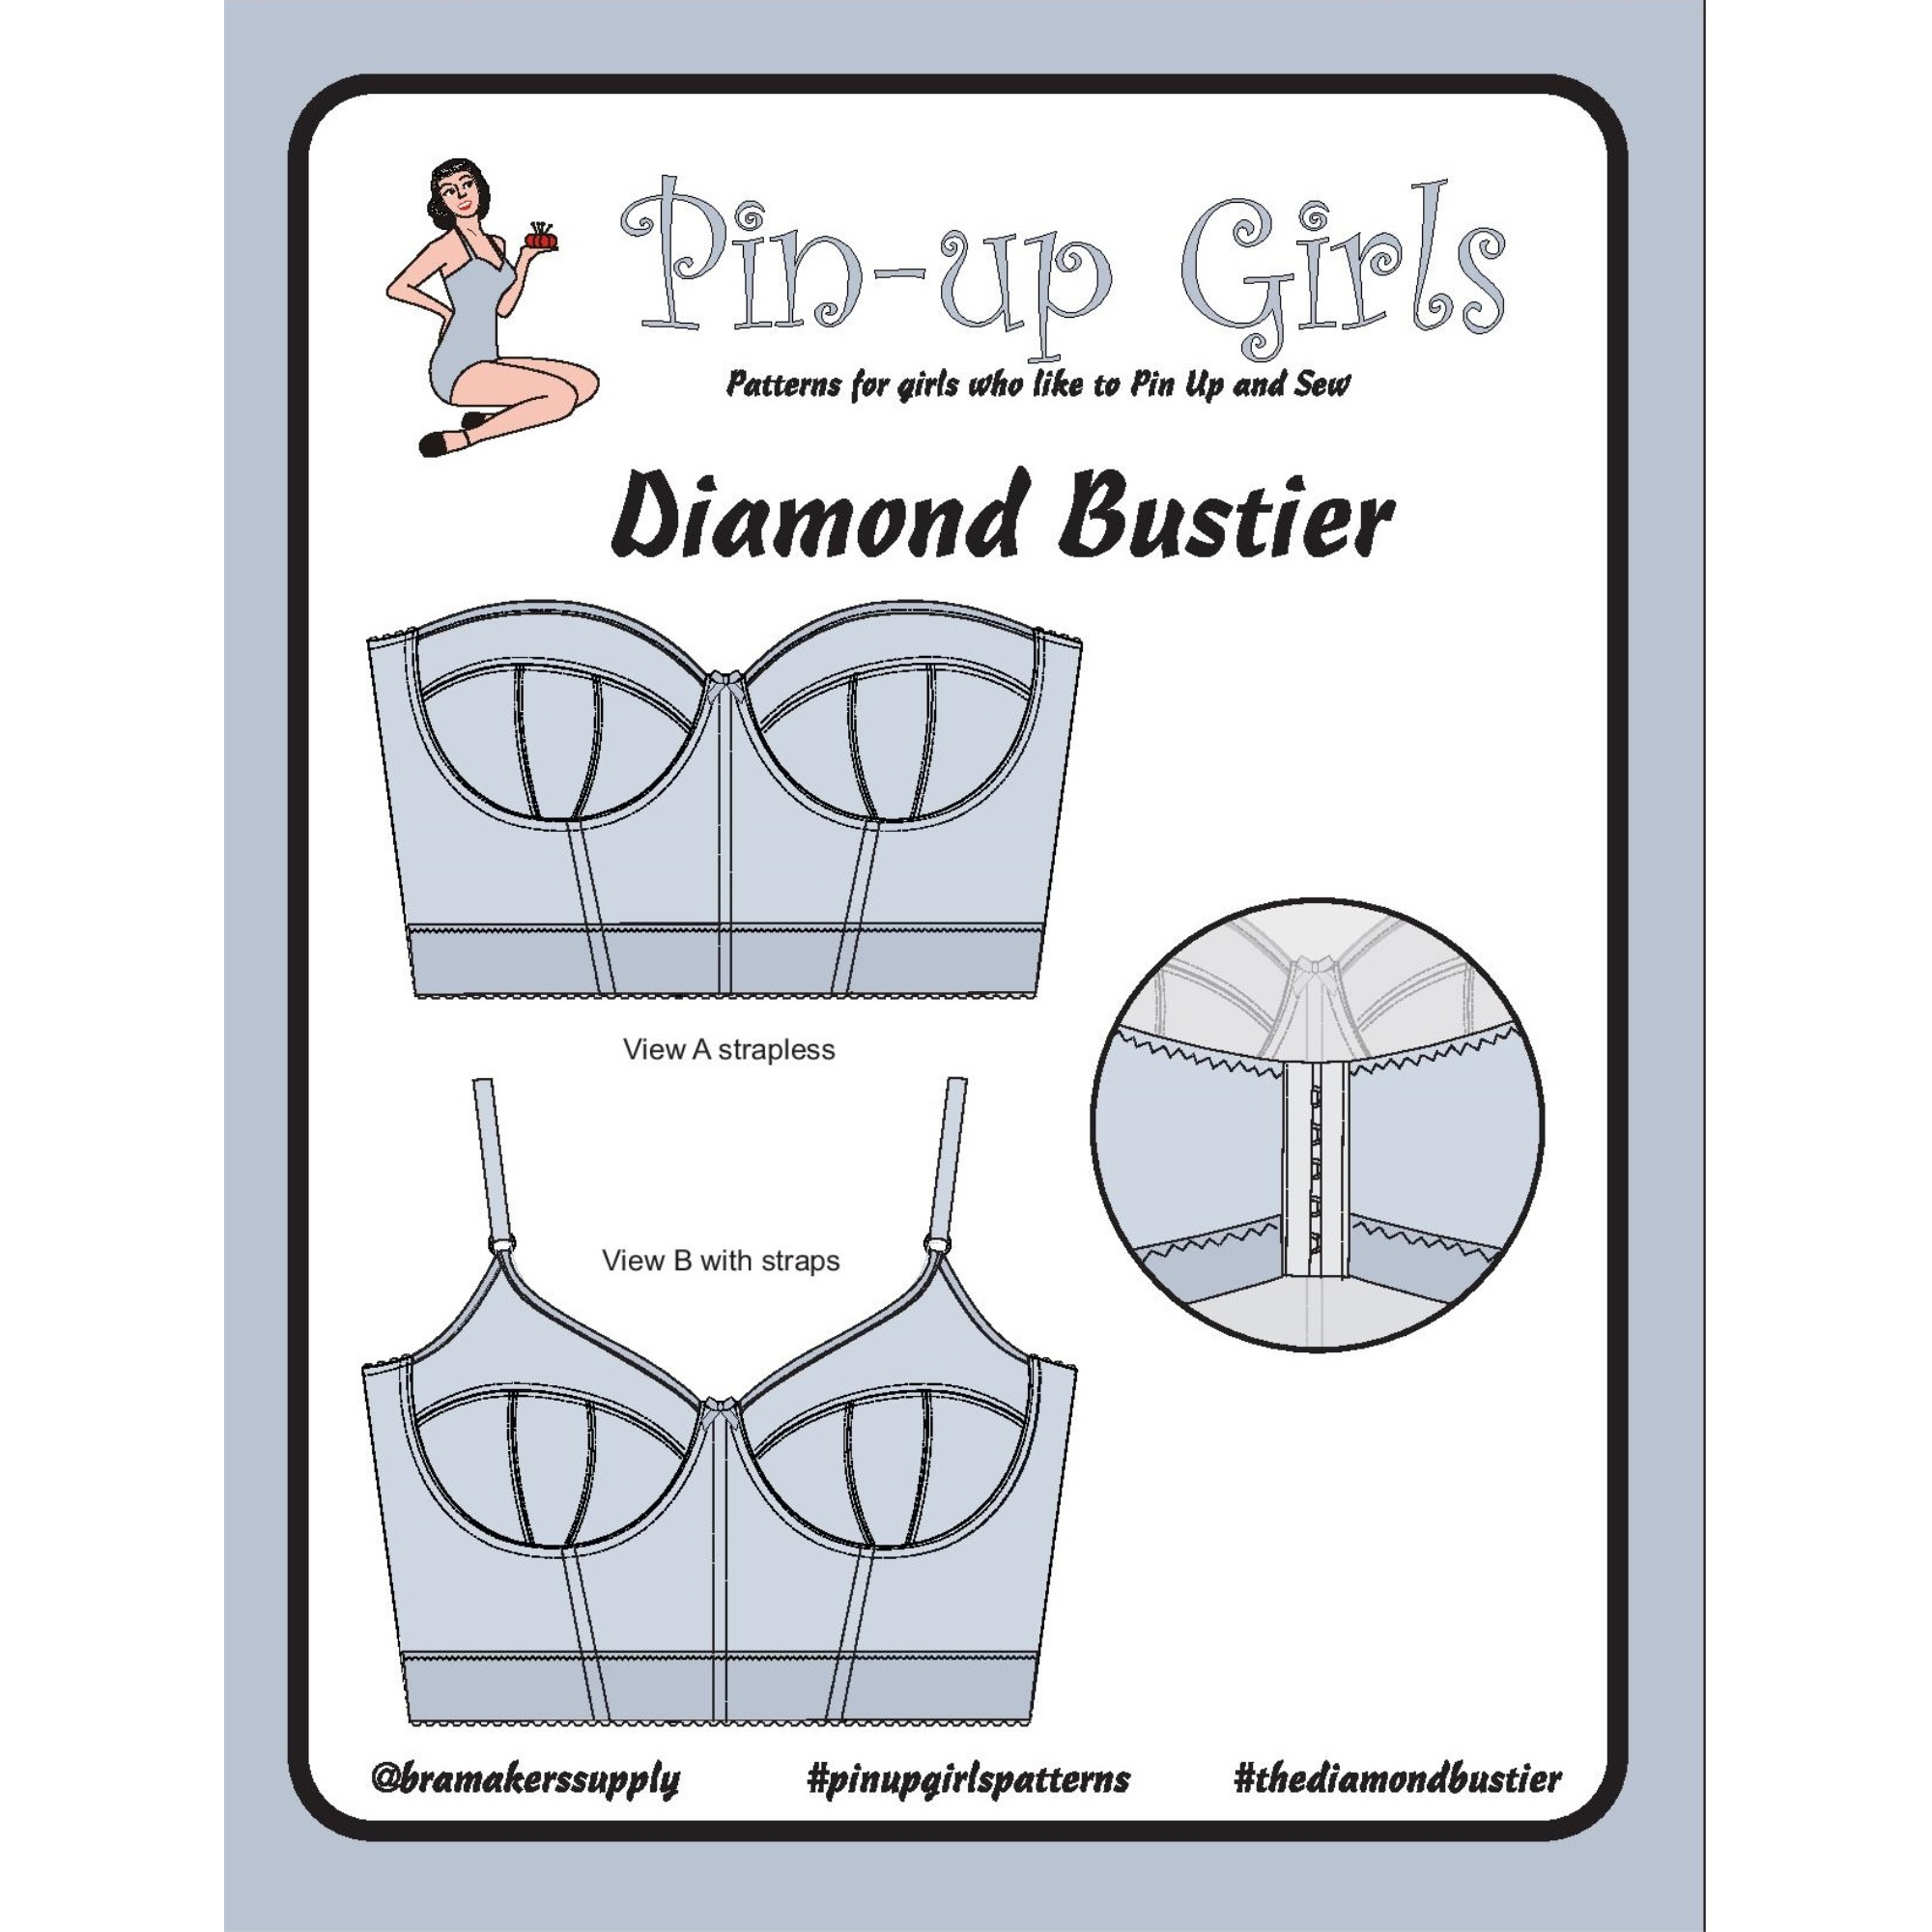 Diamond Bustier, Patterns, Bra Making